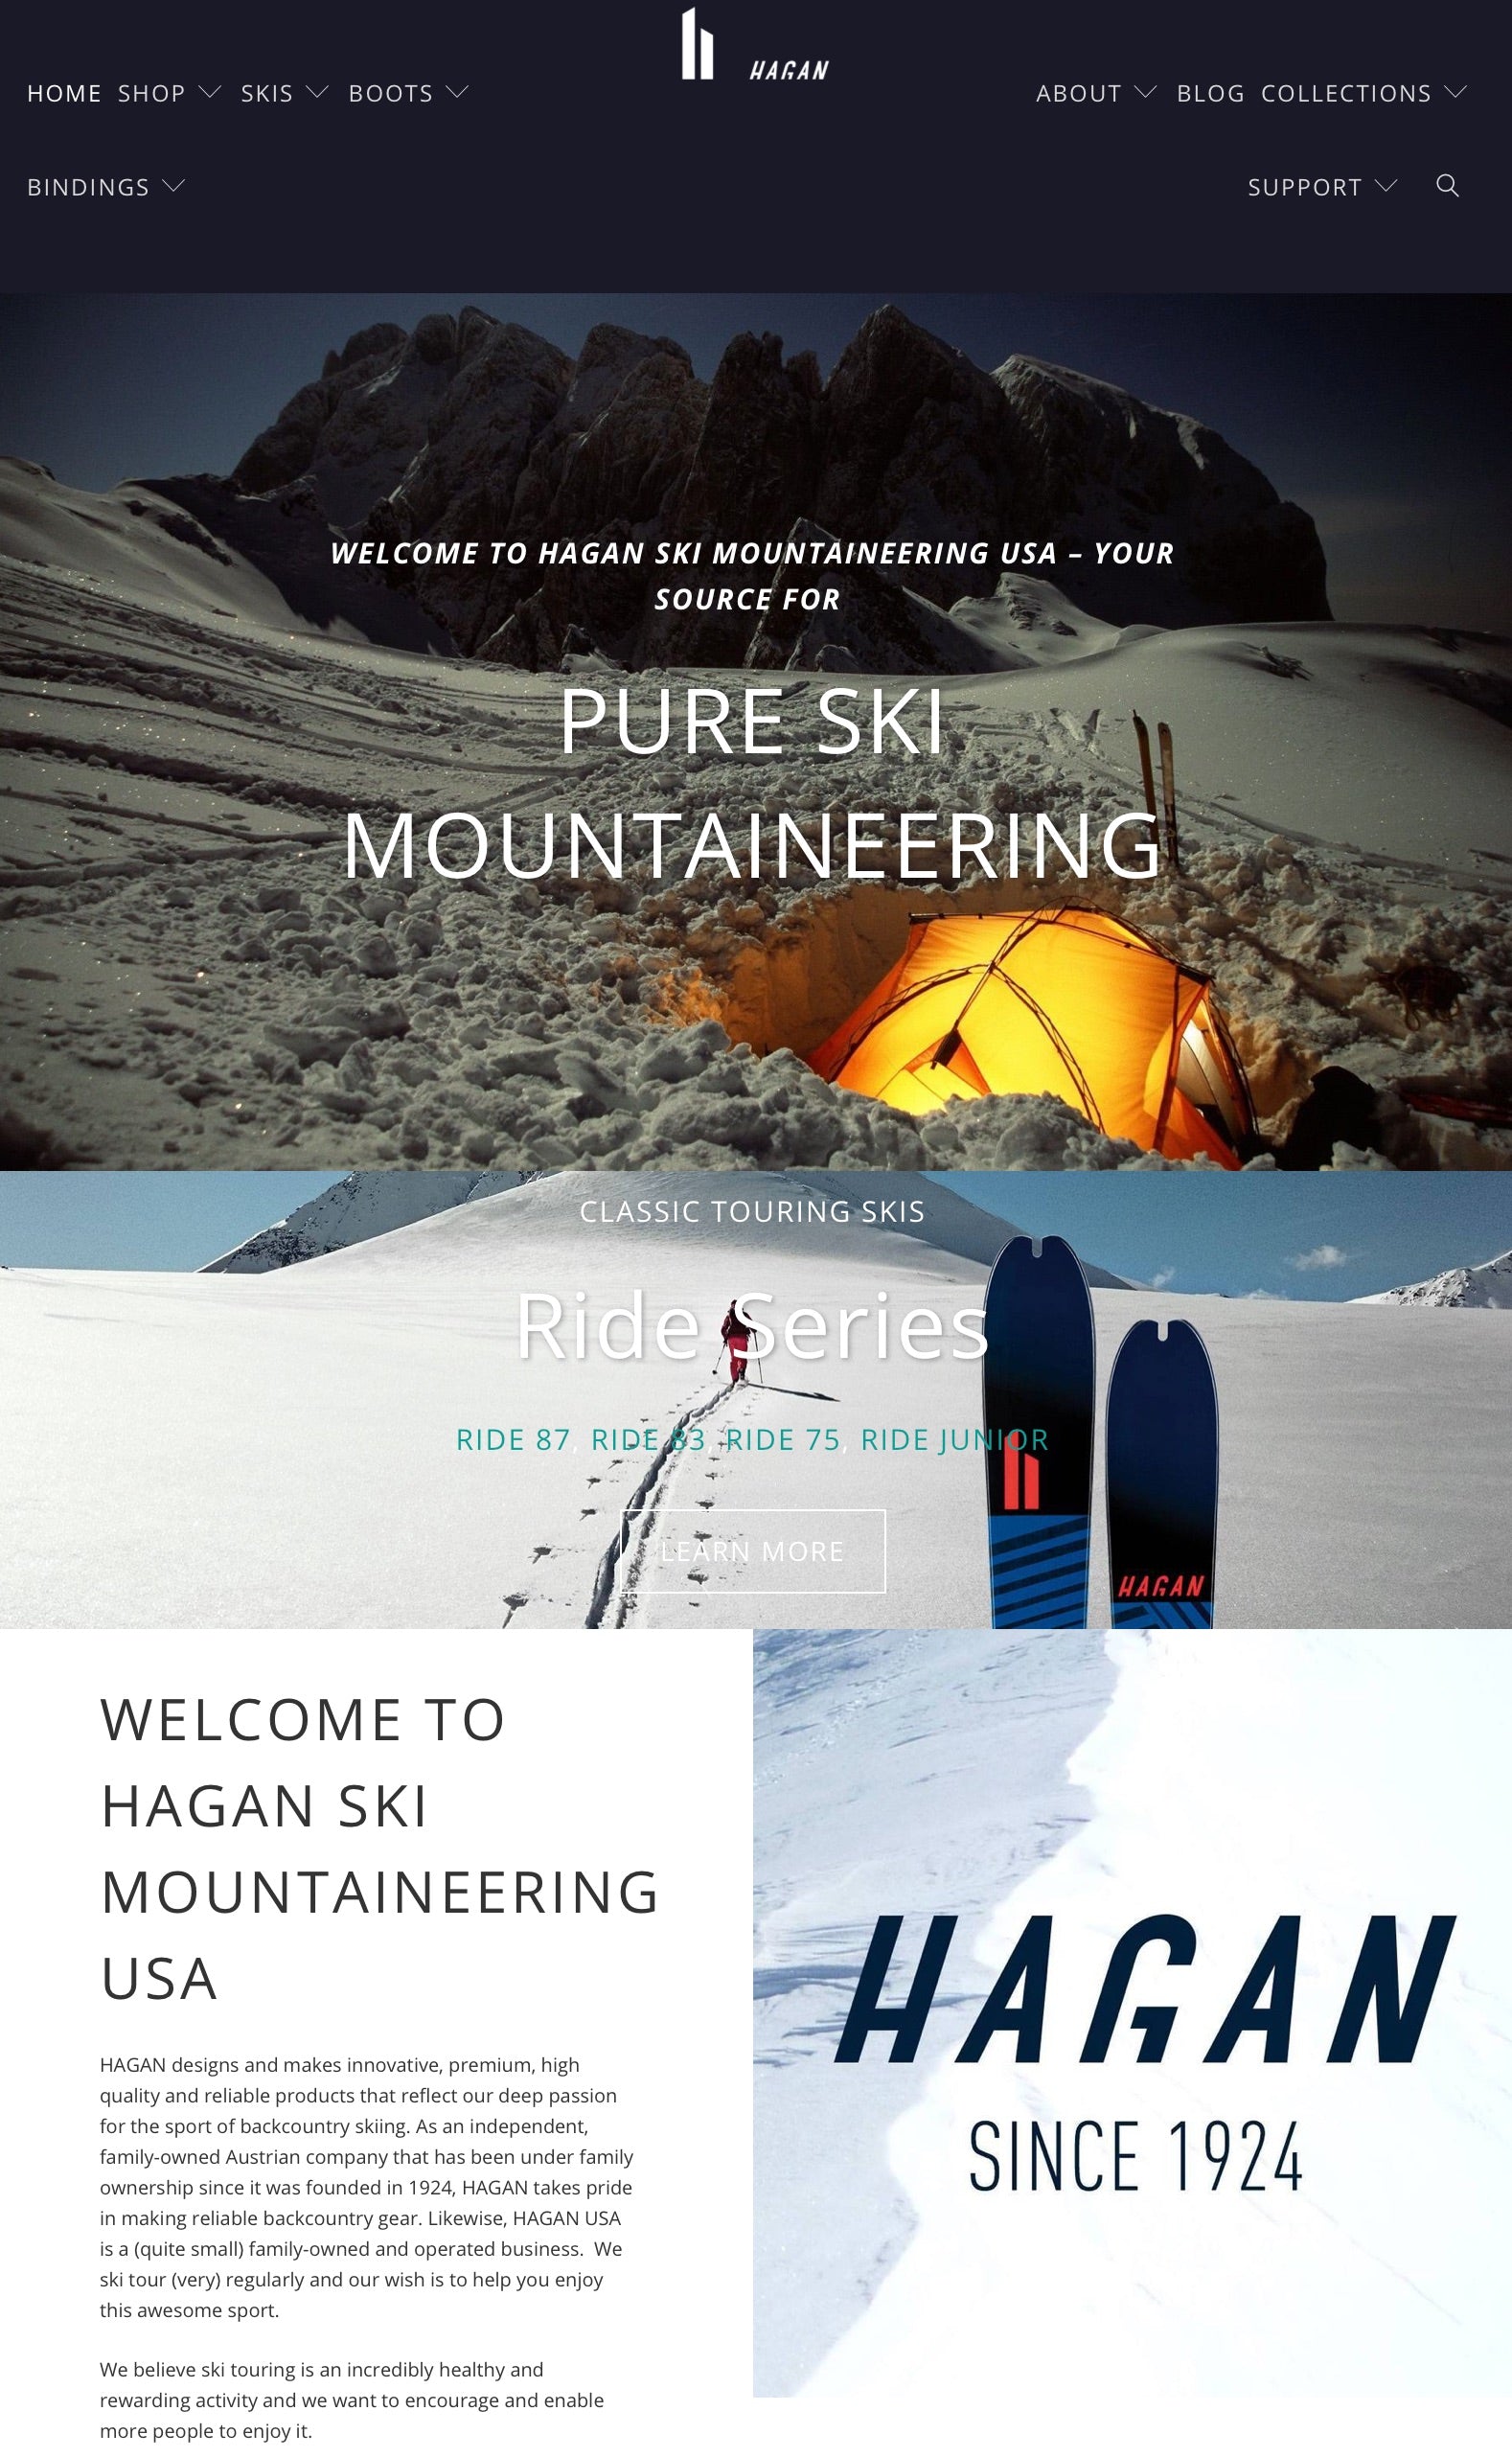 Brand New Hagan Ski Mountaineering USA Website!